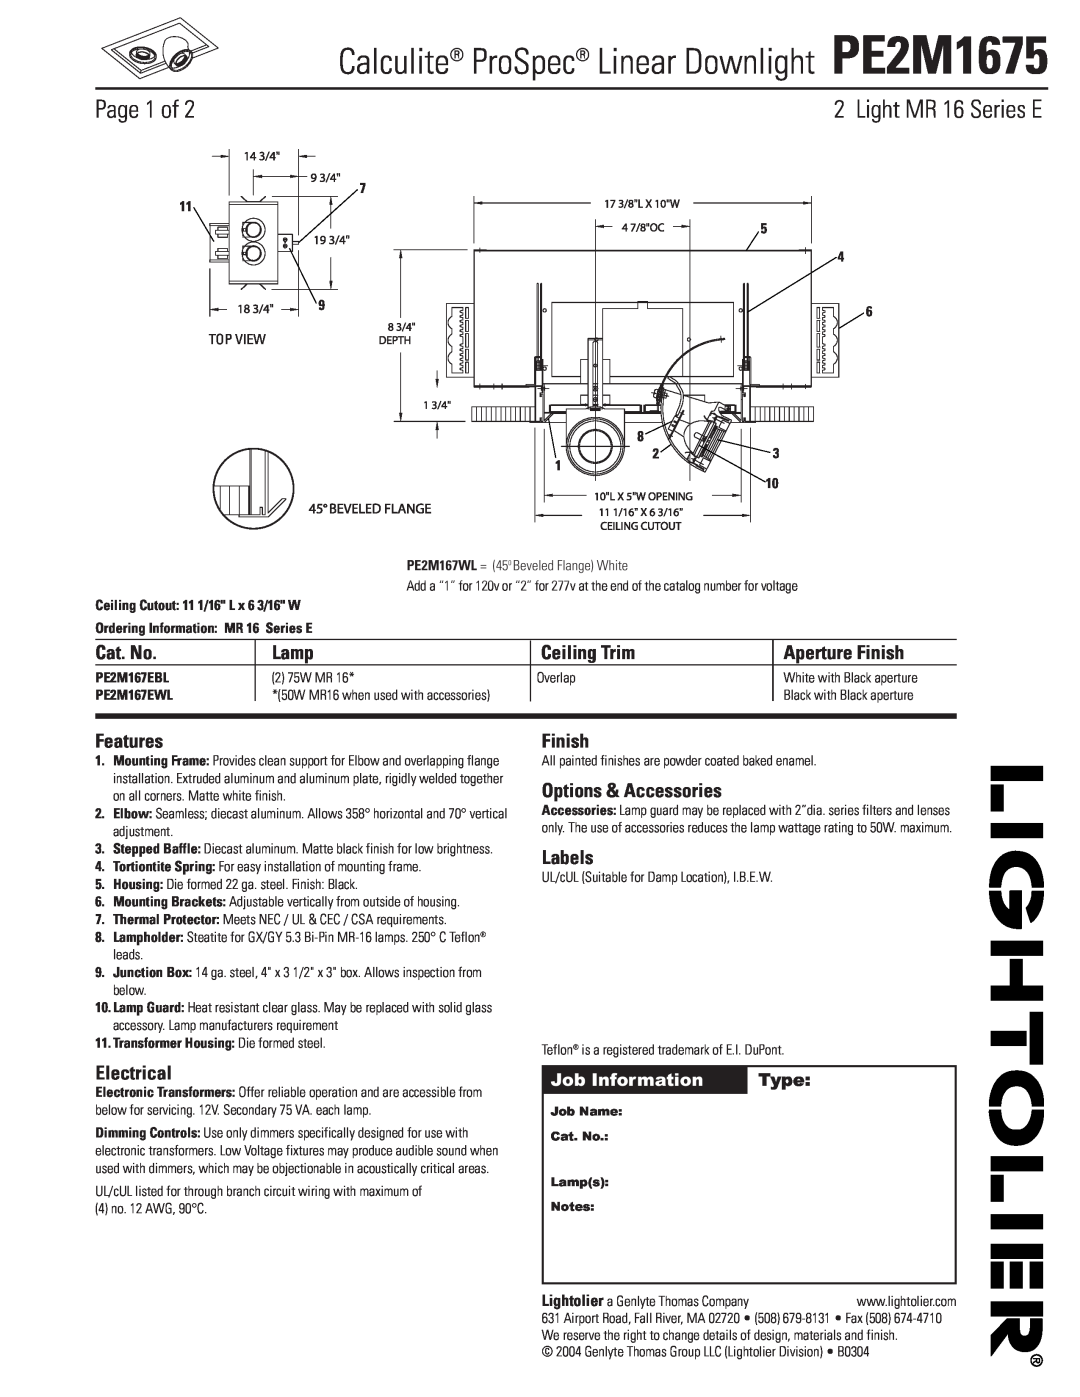 Lightolier manual Calculite ProSpec Linear Downlight PE2M1675, Page 1 of, Light MR 16 Series E, Cat. No, Lamp, Features 